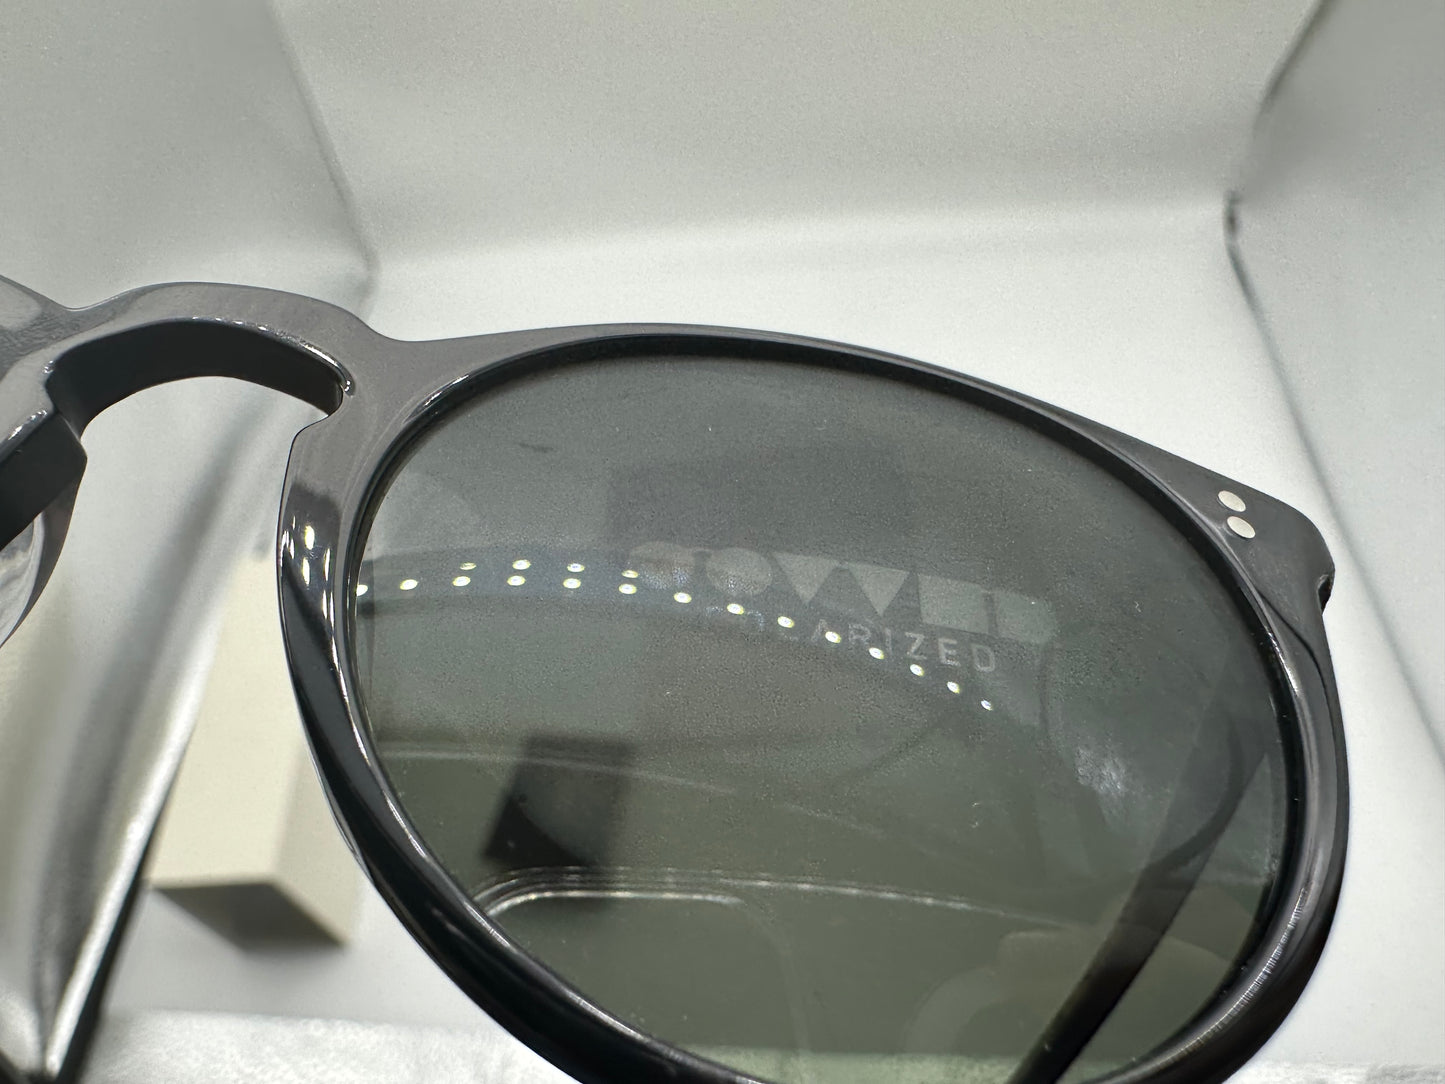 Oliver Peoples O'MALLEY SUN OV 5183S 48mm Black G15 Polarized Sunglasses